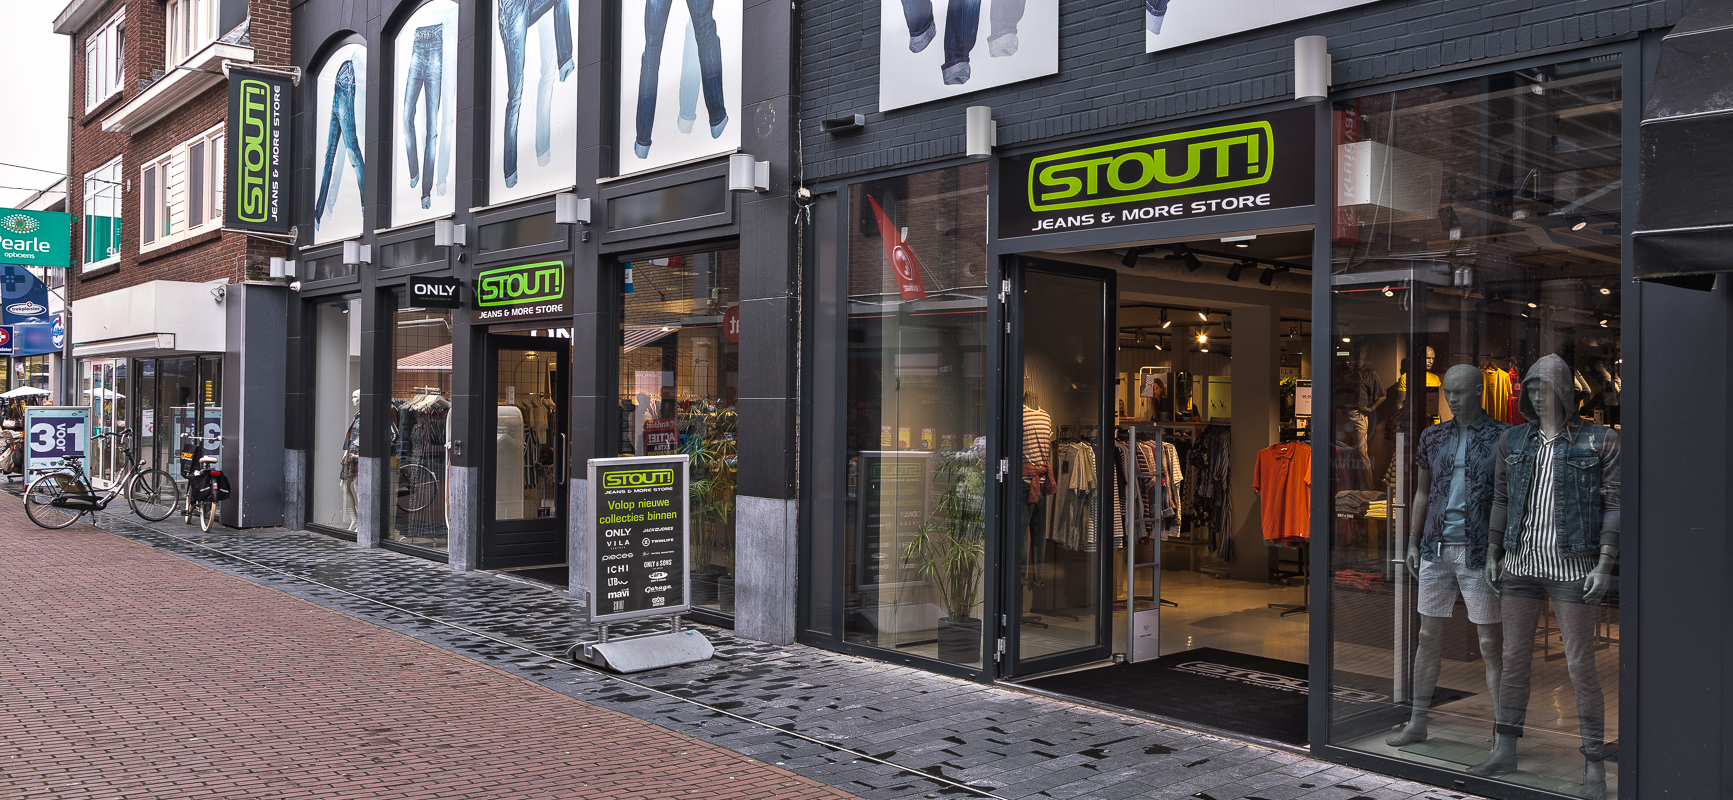 Stout Jeans | Raalte (NL) - 